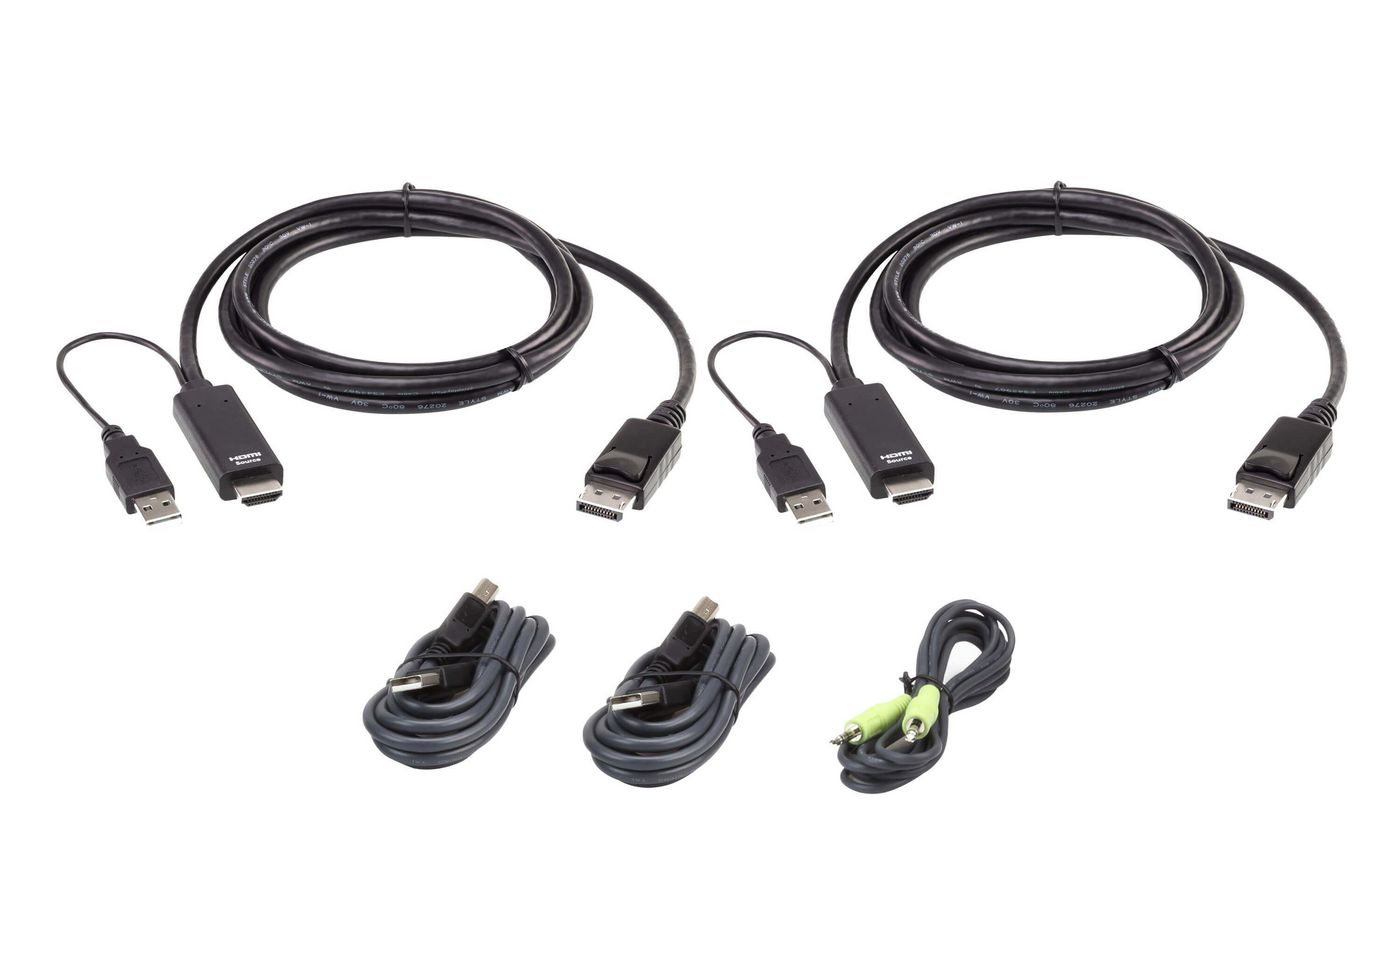 Aten 2L-7D02UHDPX5 W127165005 Cable kit: 2x True 4K 1.8M 